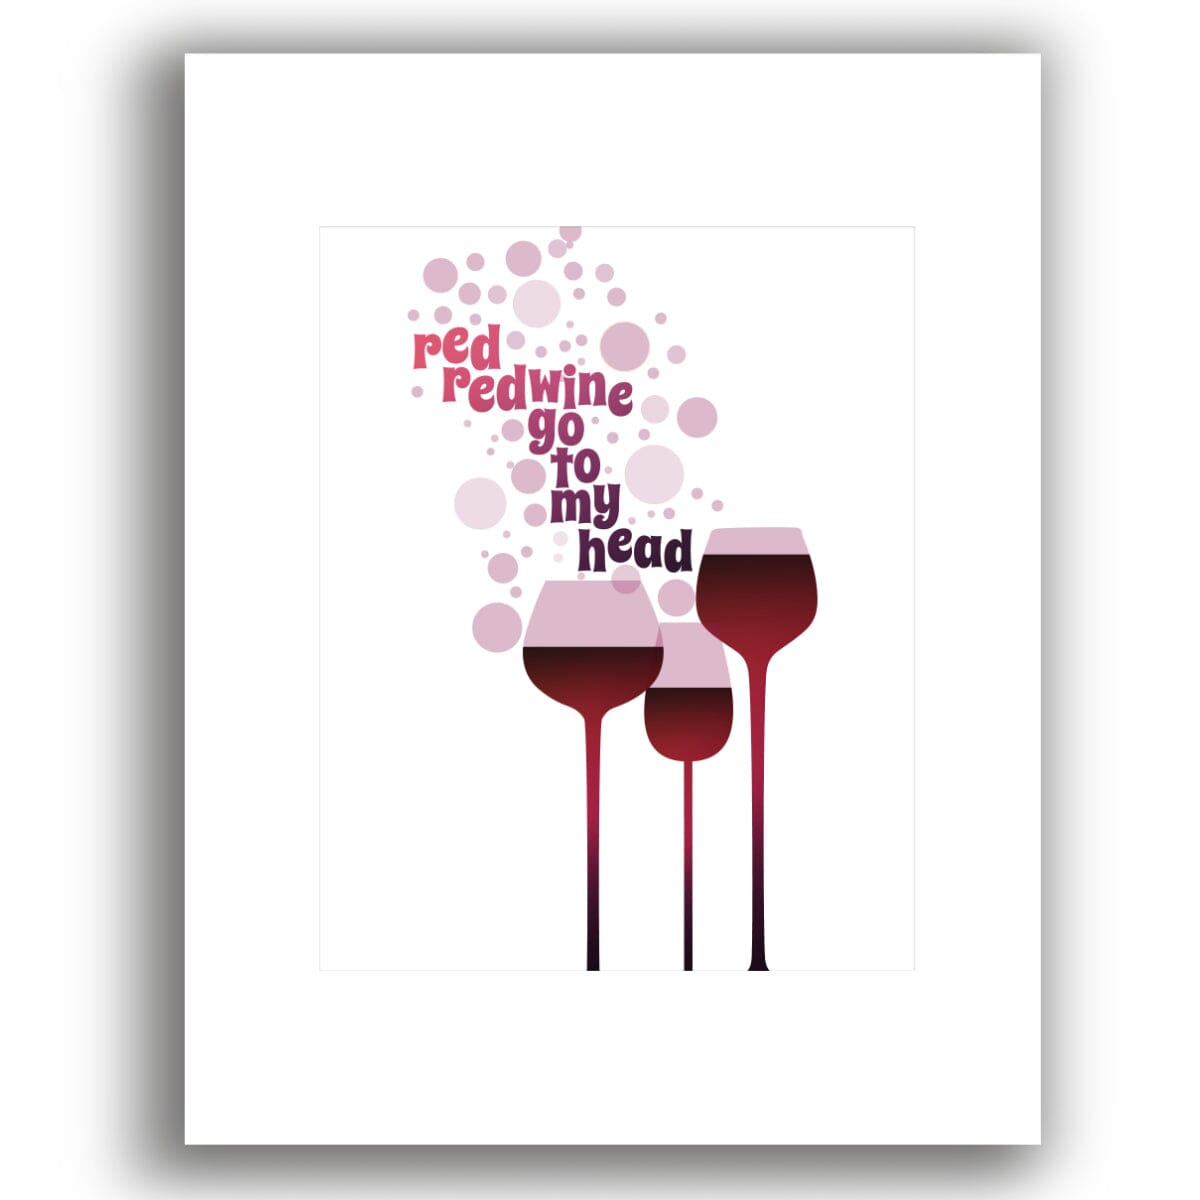 Red Red Wine by Neil Diamond - Music Quote Poster Art Song Lyrics Art Song Lyrics Art 8x10 White Matted Print 